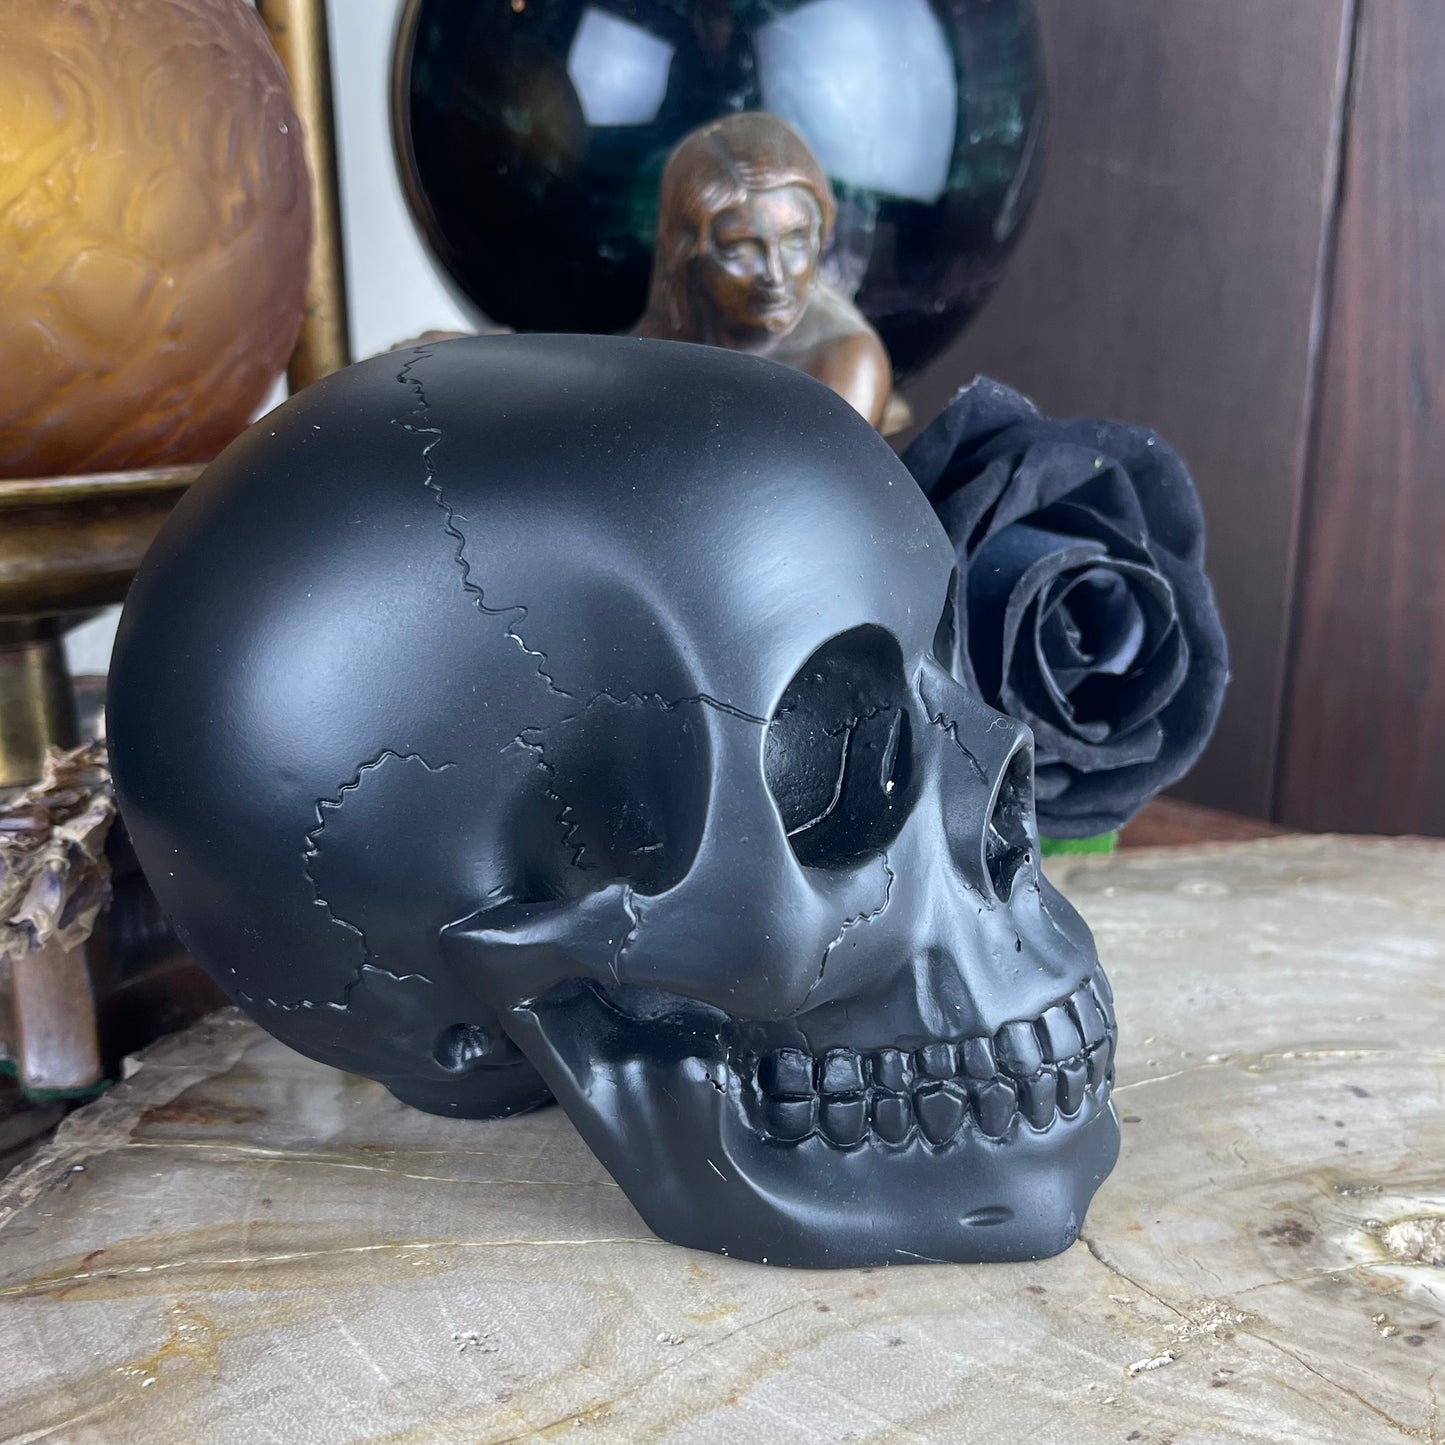 Black Matte Human Skull